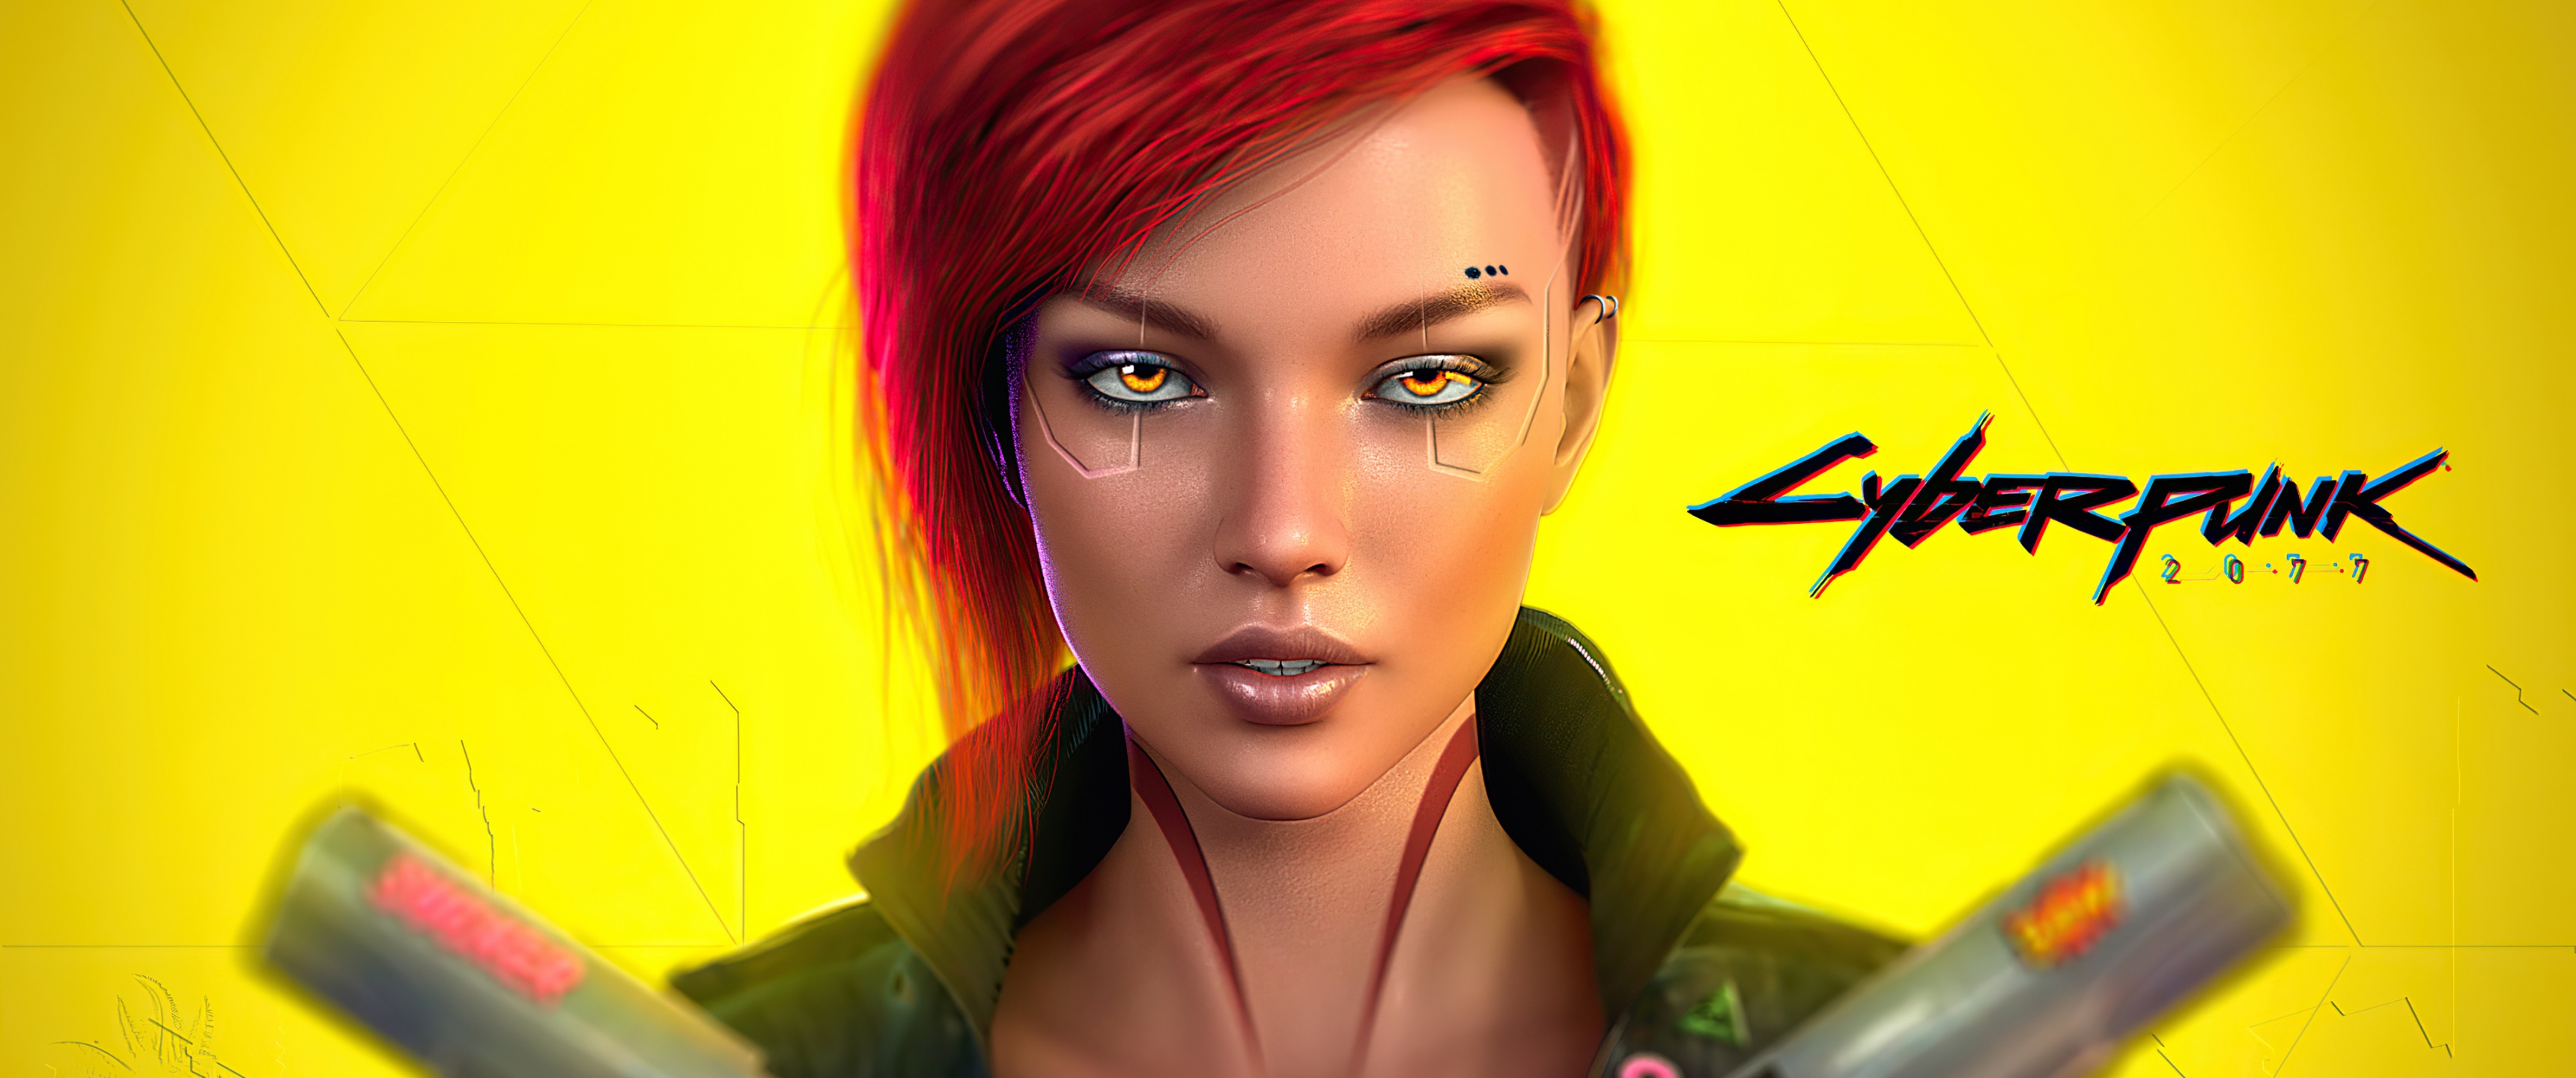 Female V Wallpaper 4K, Cyberpunk Cover Art, Yellow background, Games